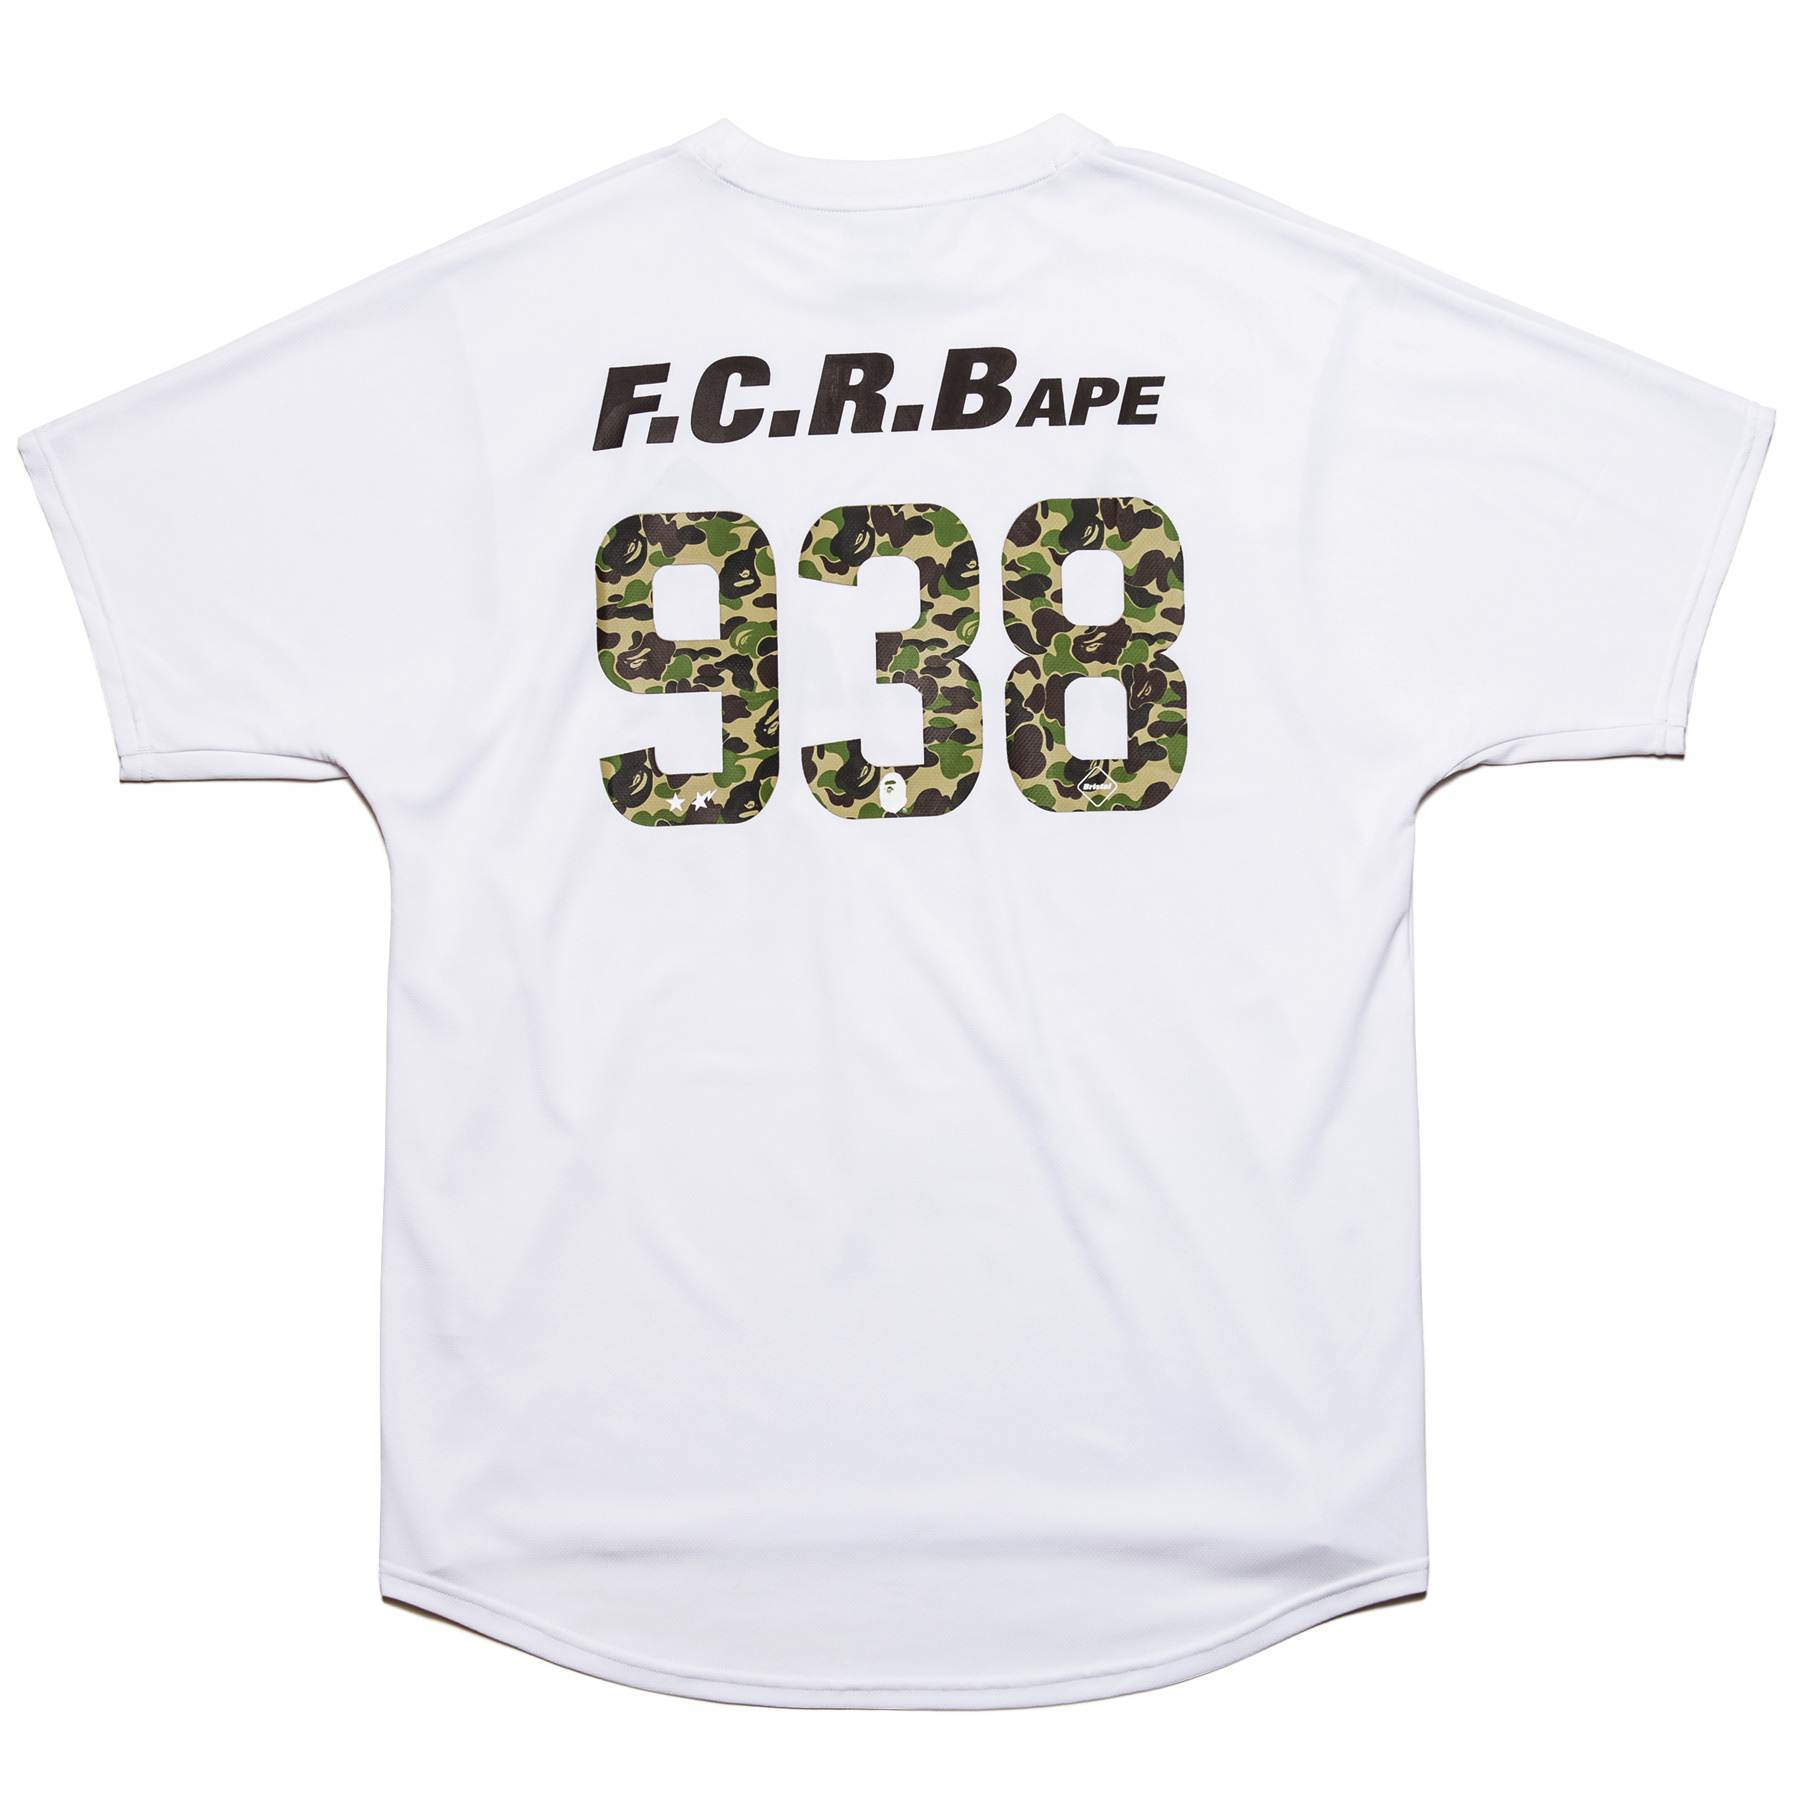 BAPE x F.C.R.B. 938 Team Tee White Men's - SS19 - US